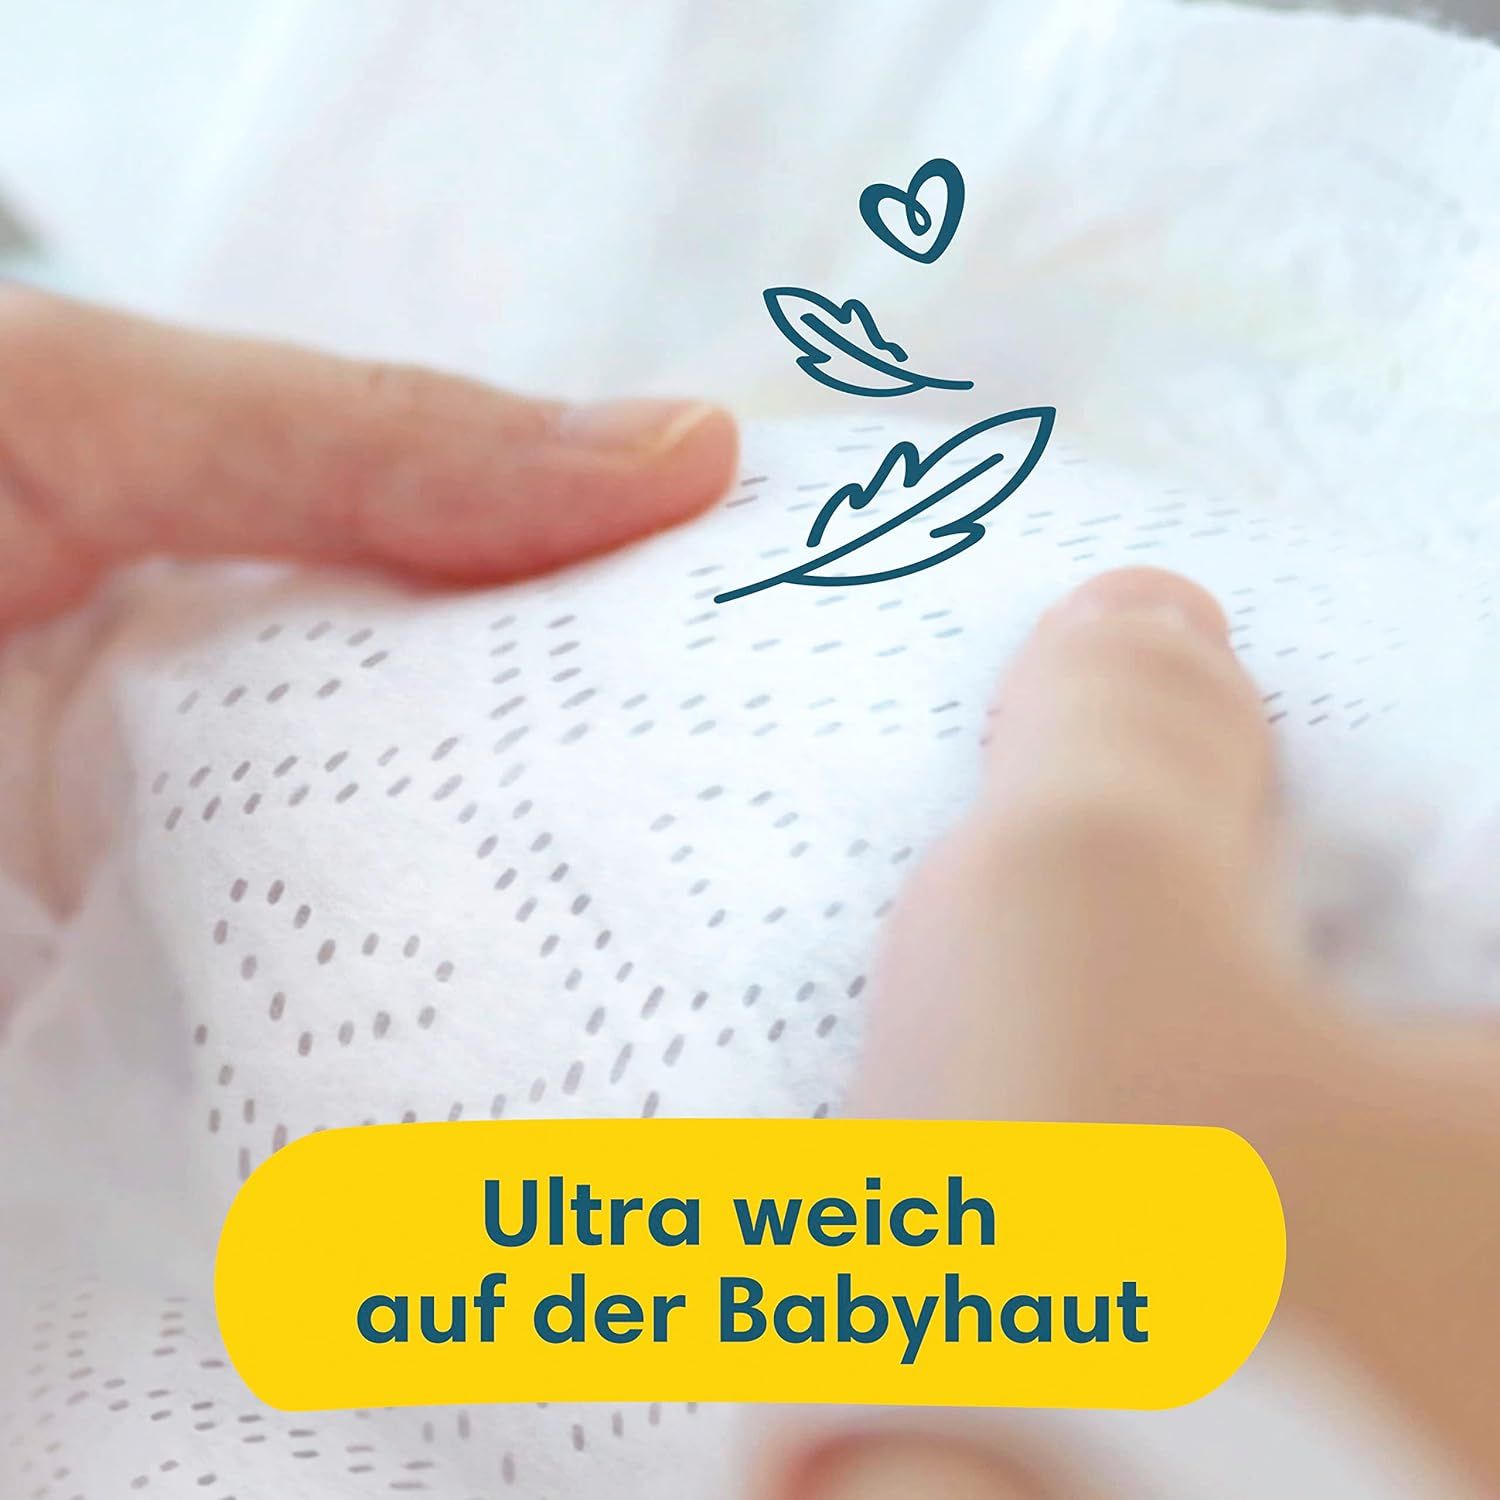 Pampers Baby Windeln Größe 4 (9-14kg) Premium Protection